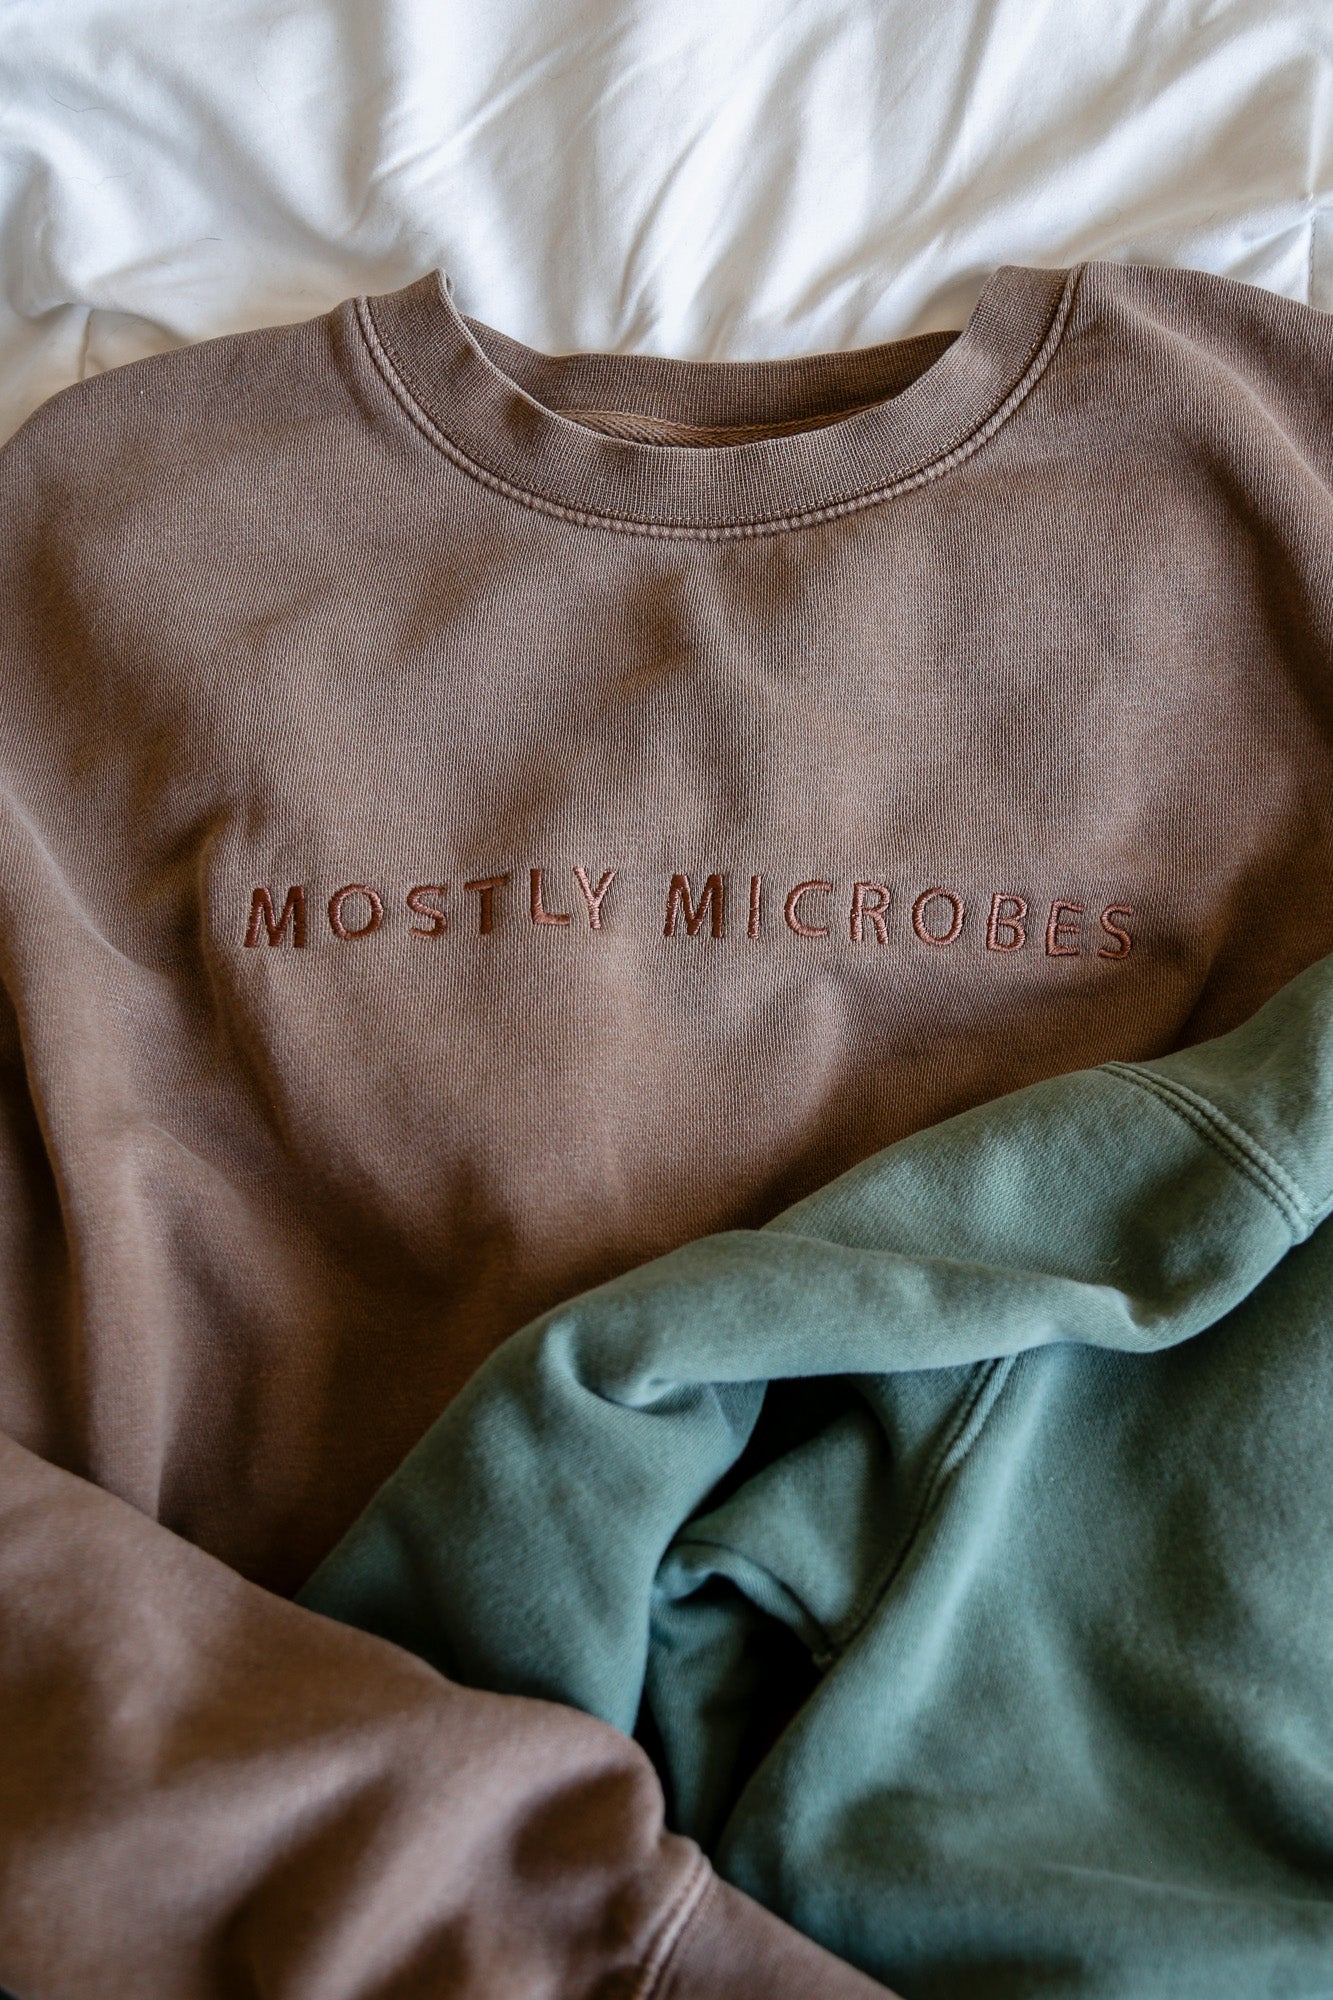 Mostly Microbes Sweatshirt